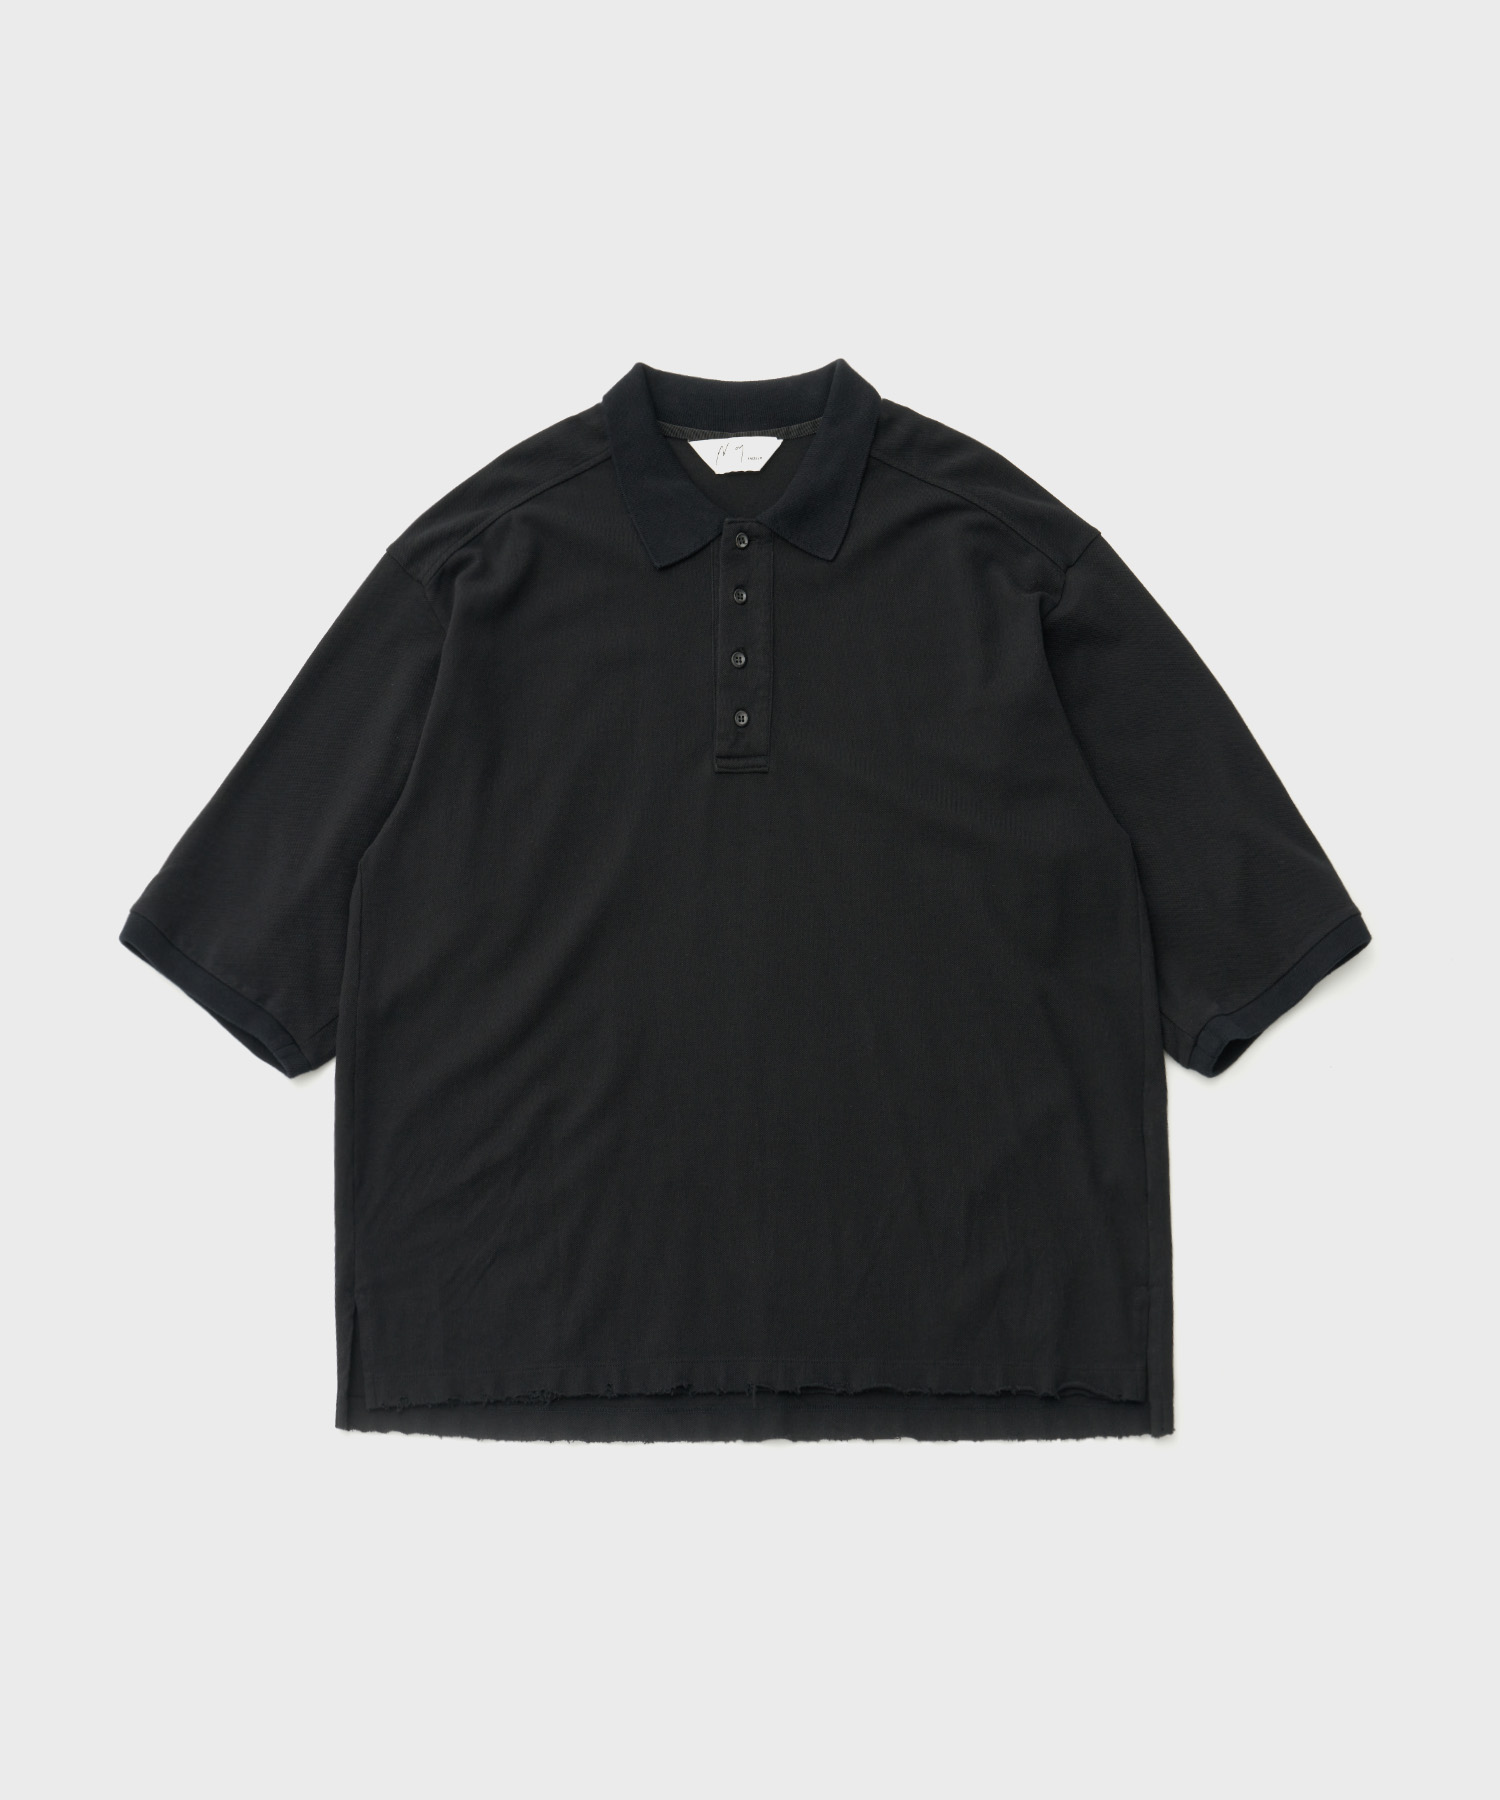 Aging Polo Shirt (Black)